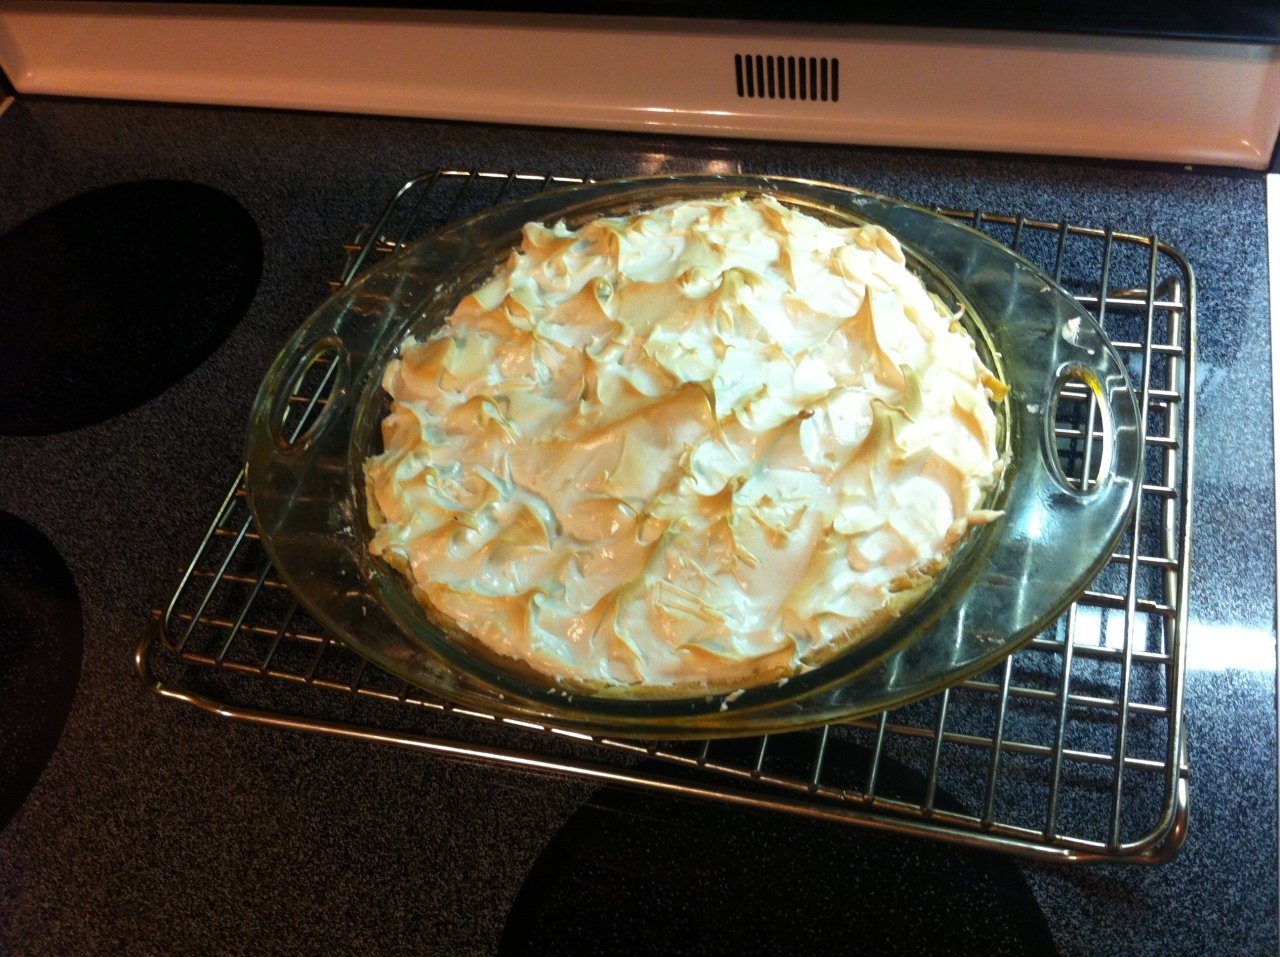 My wife's homemade Lemon Meringue Pie